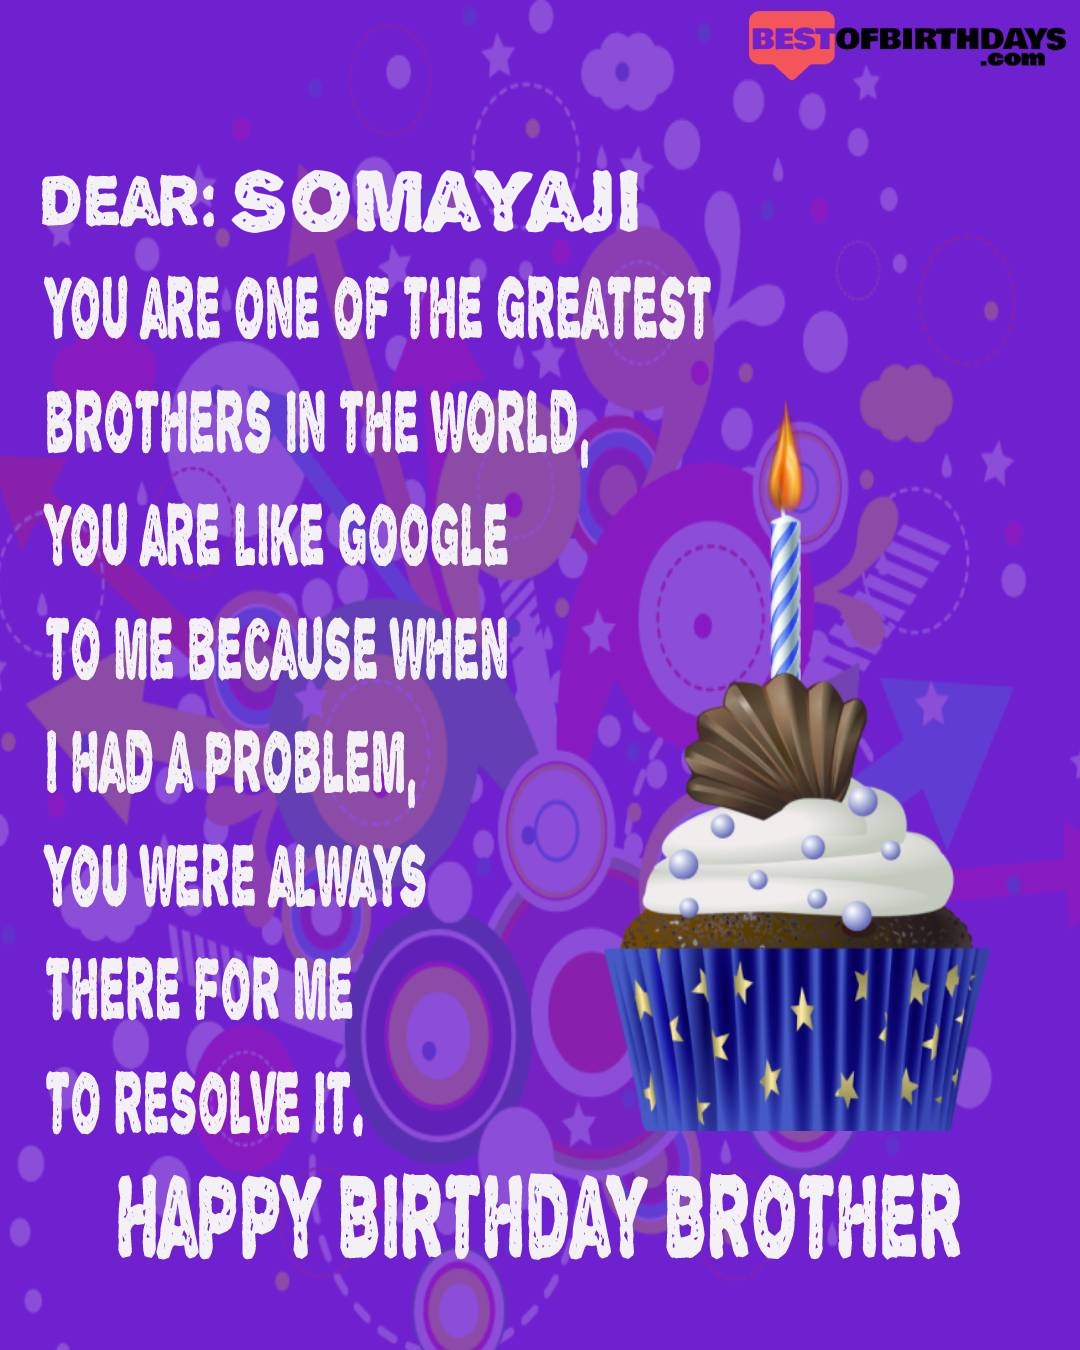 Happy birthday somayaji bhai brother bro